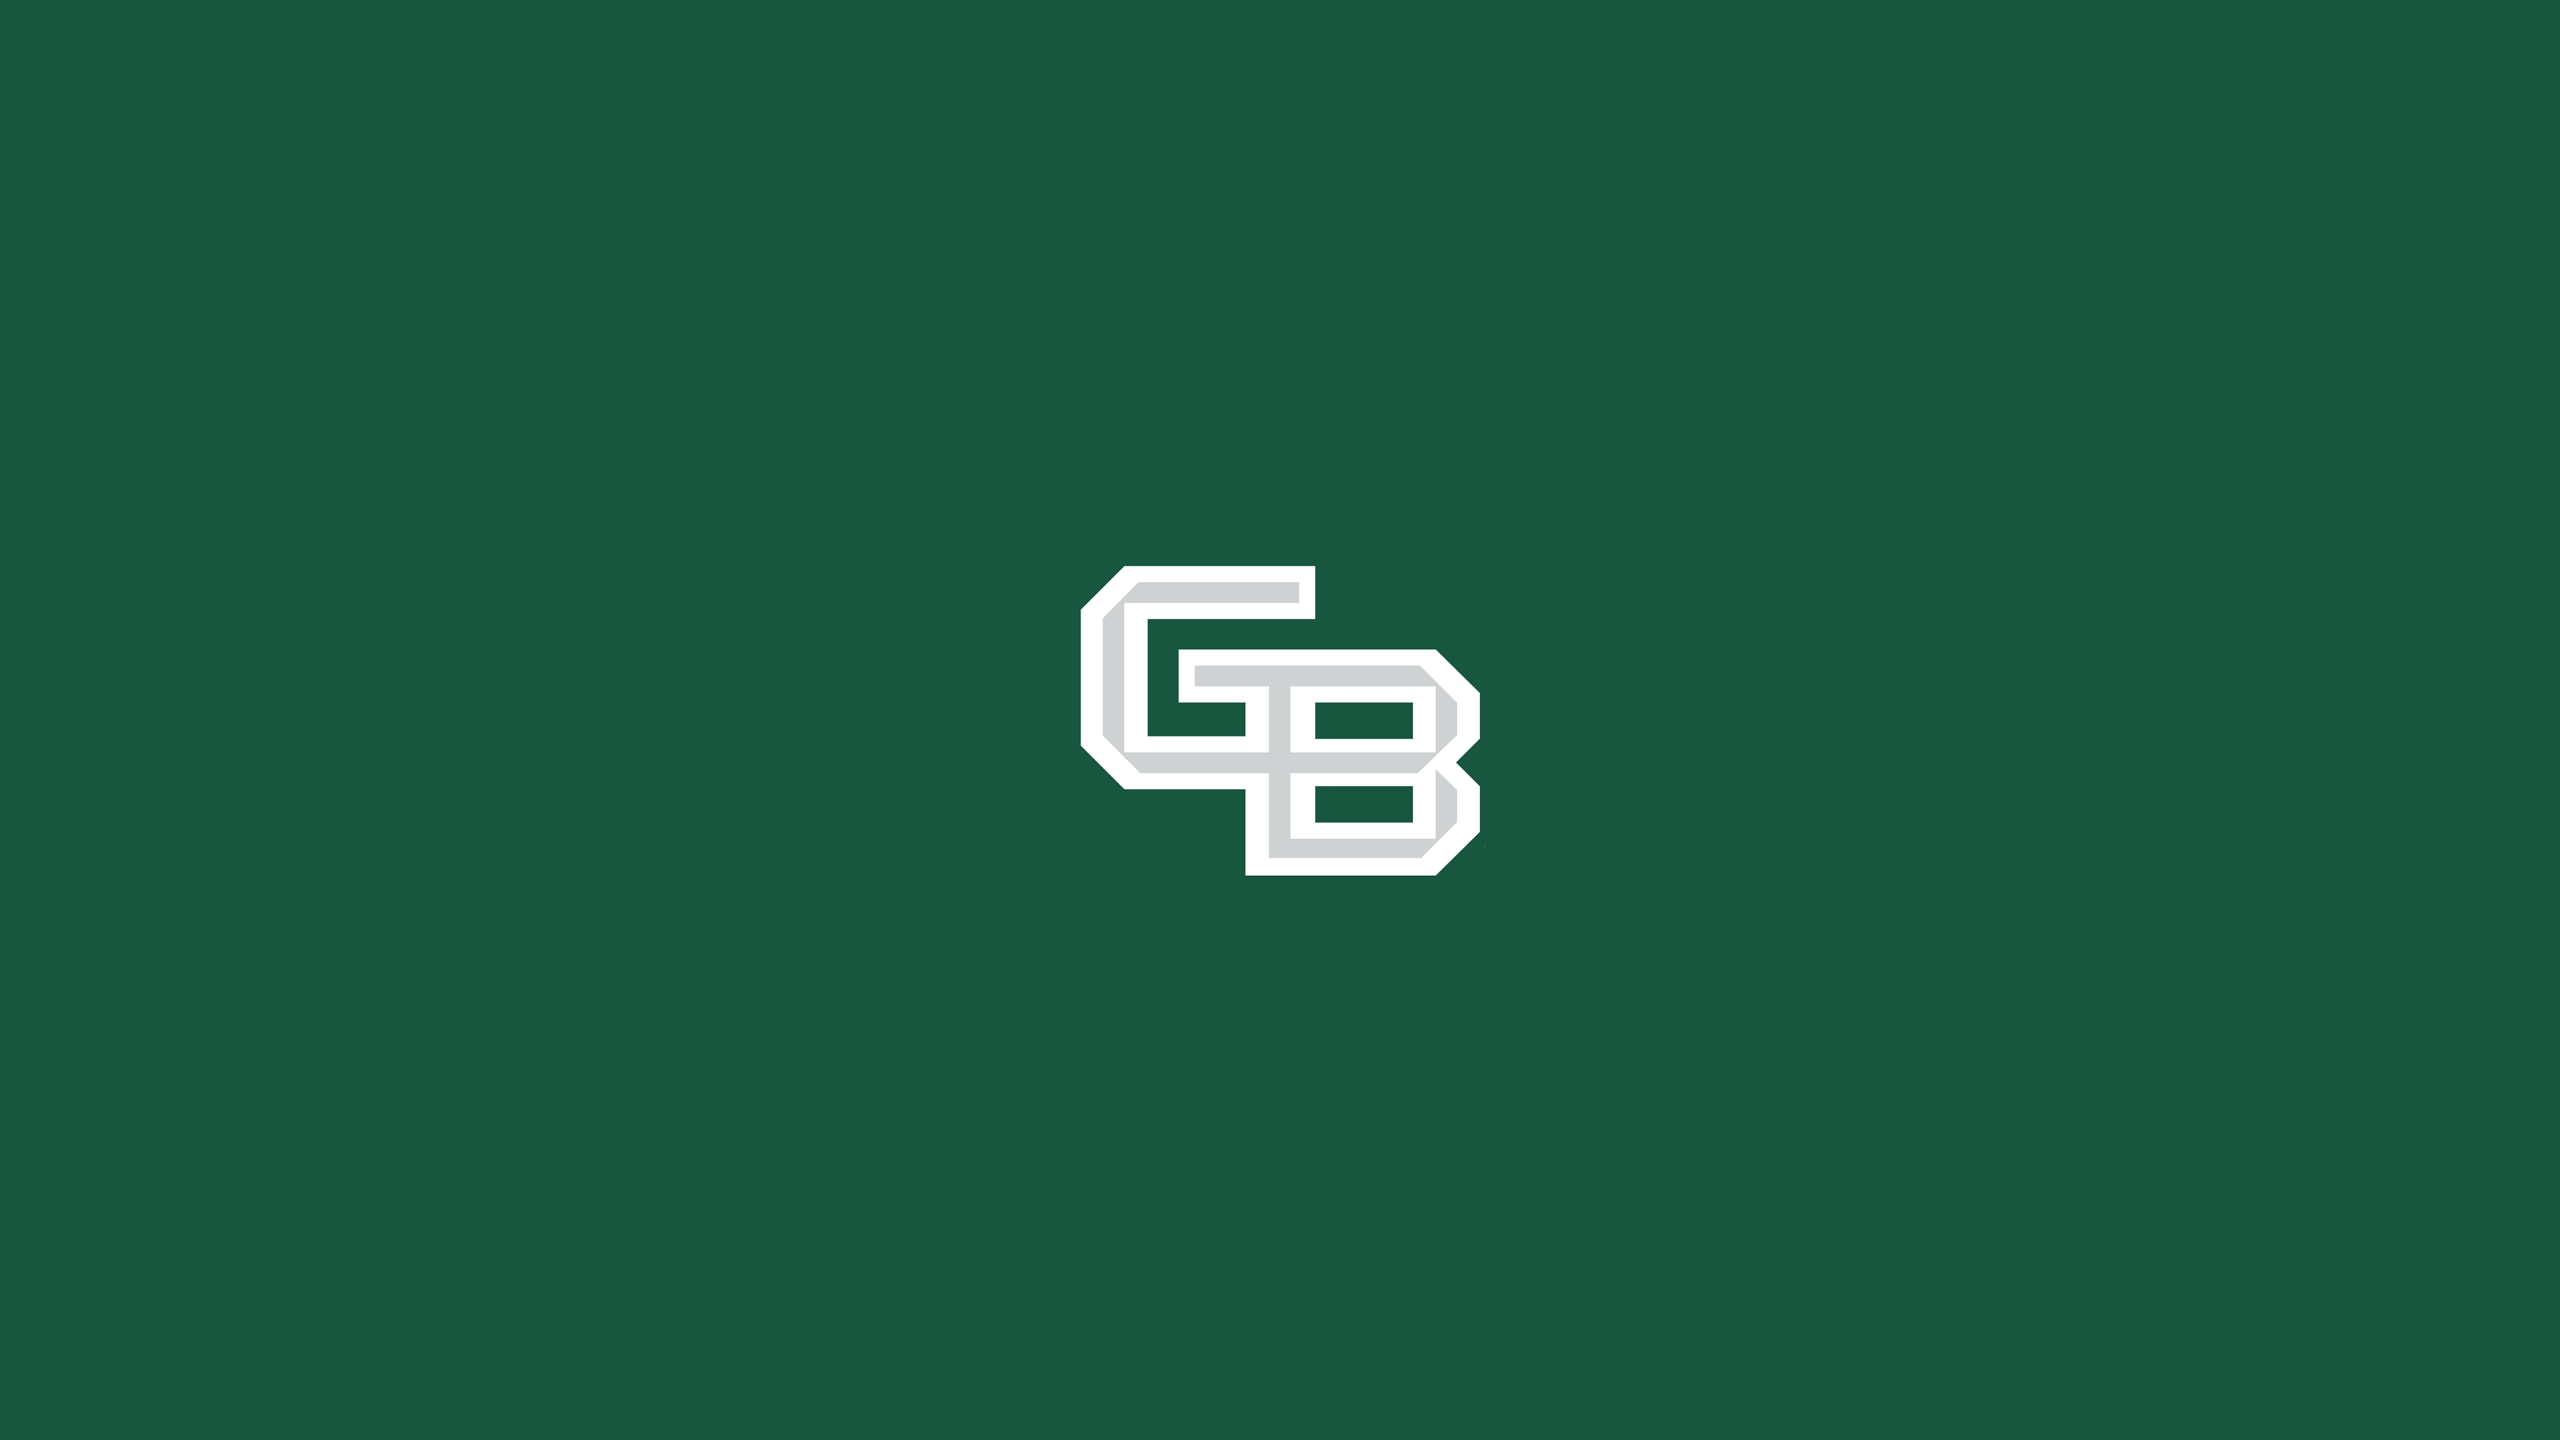 Green Bay Phoenix - NCAAB - Square Bettor